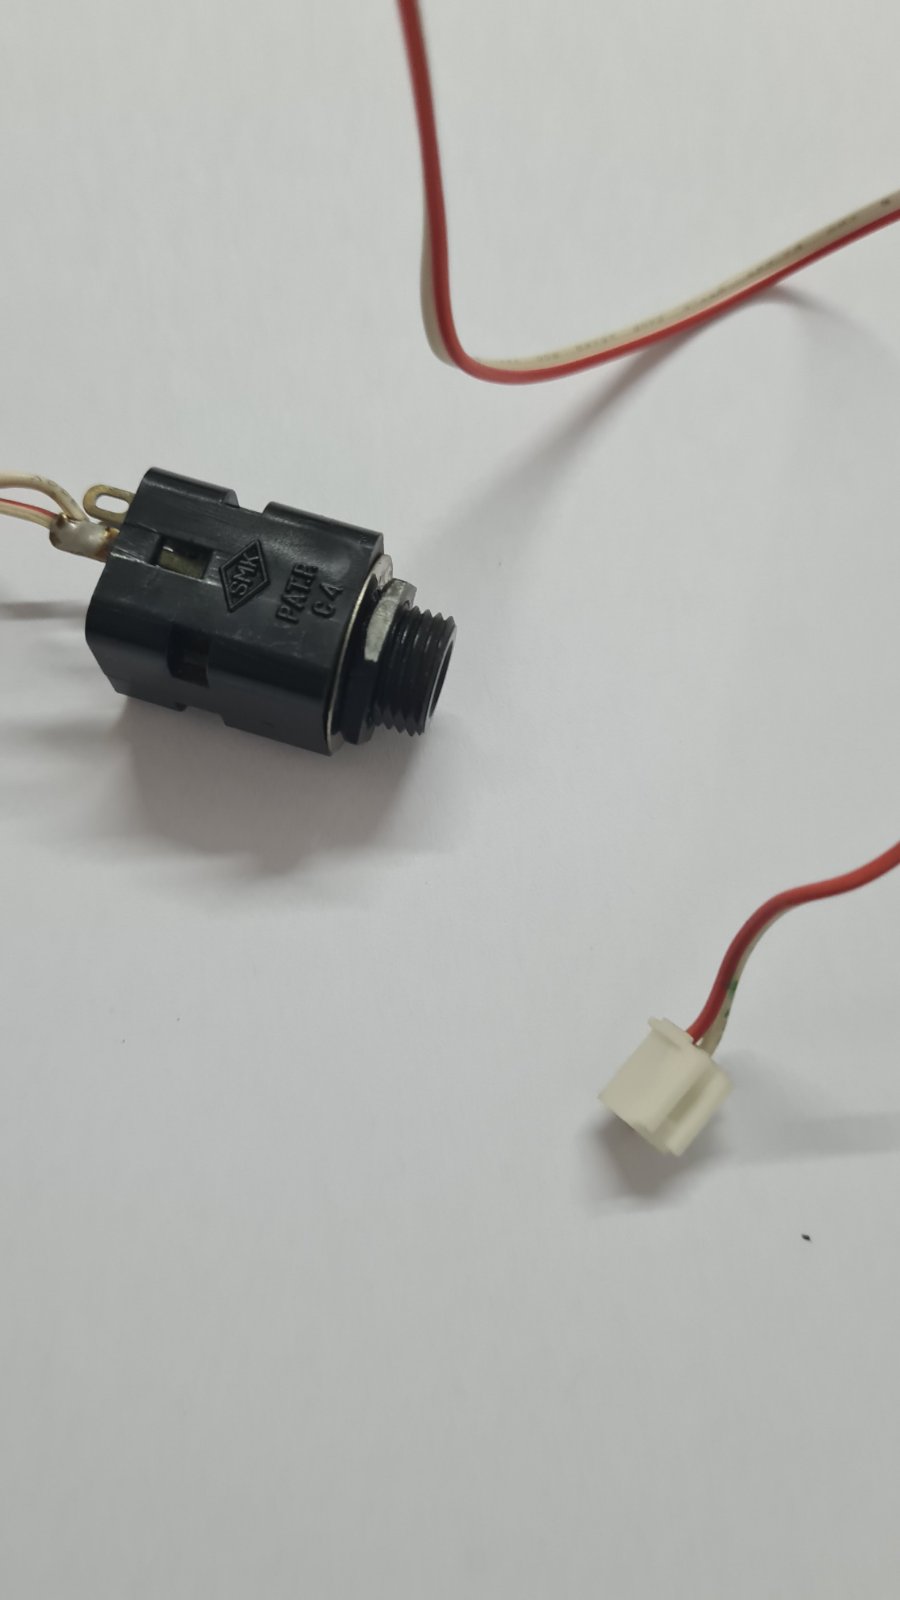 Fostex B16 1/4 inch jack socket connector